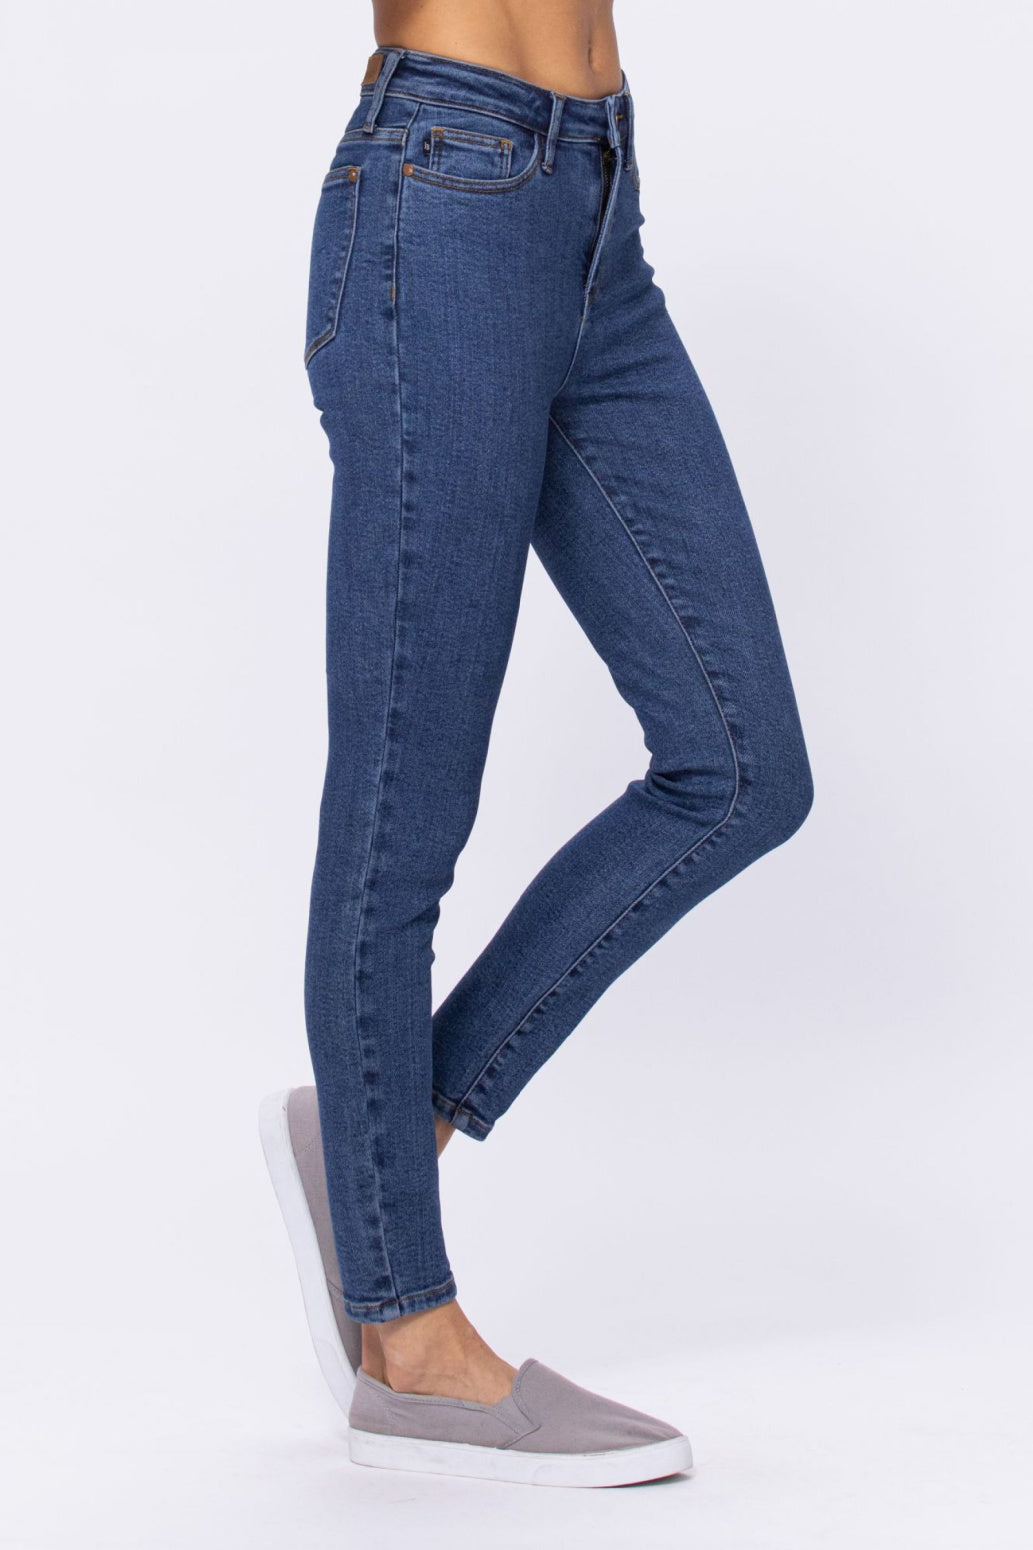 Judy Blue Stone Wash High Waist Skinny Jeans Style 88338